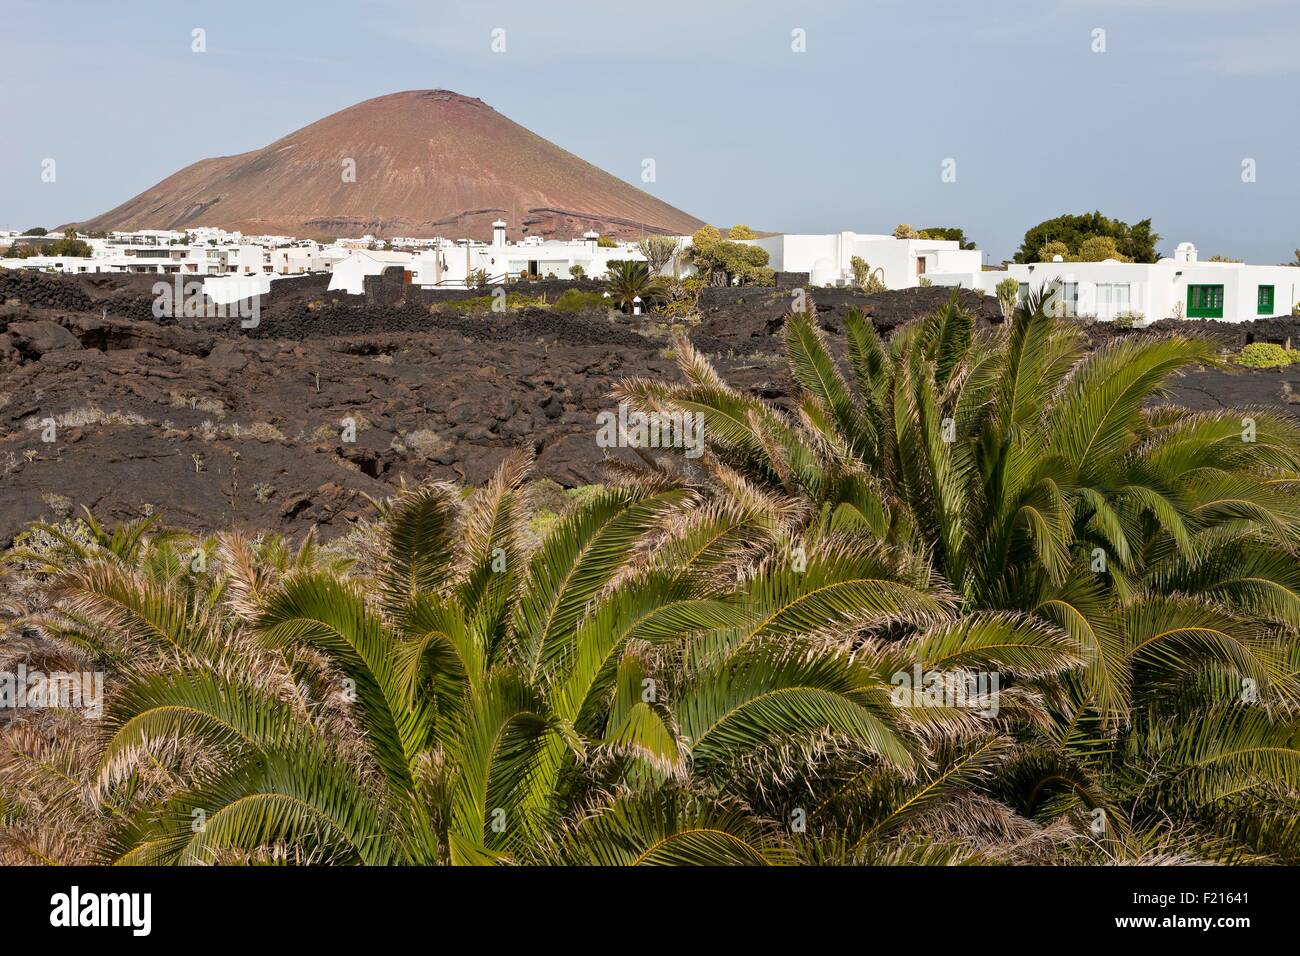 Spain, Canaries Islands, Lanzarote island, the village of Tahiche Stock Photo